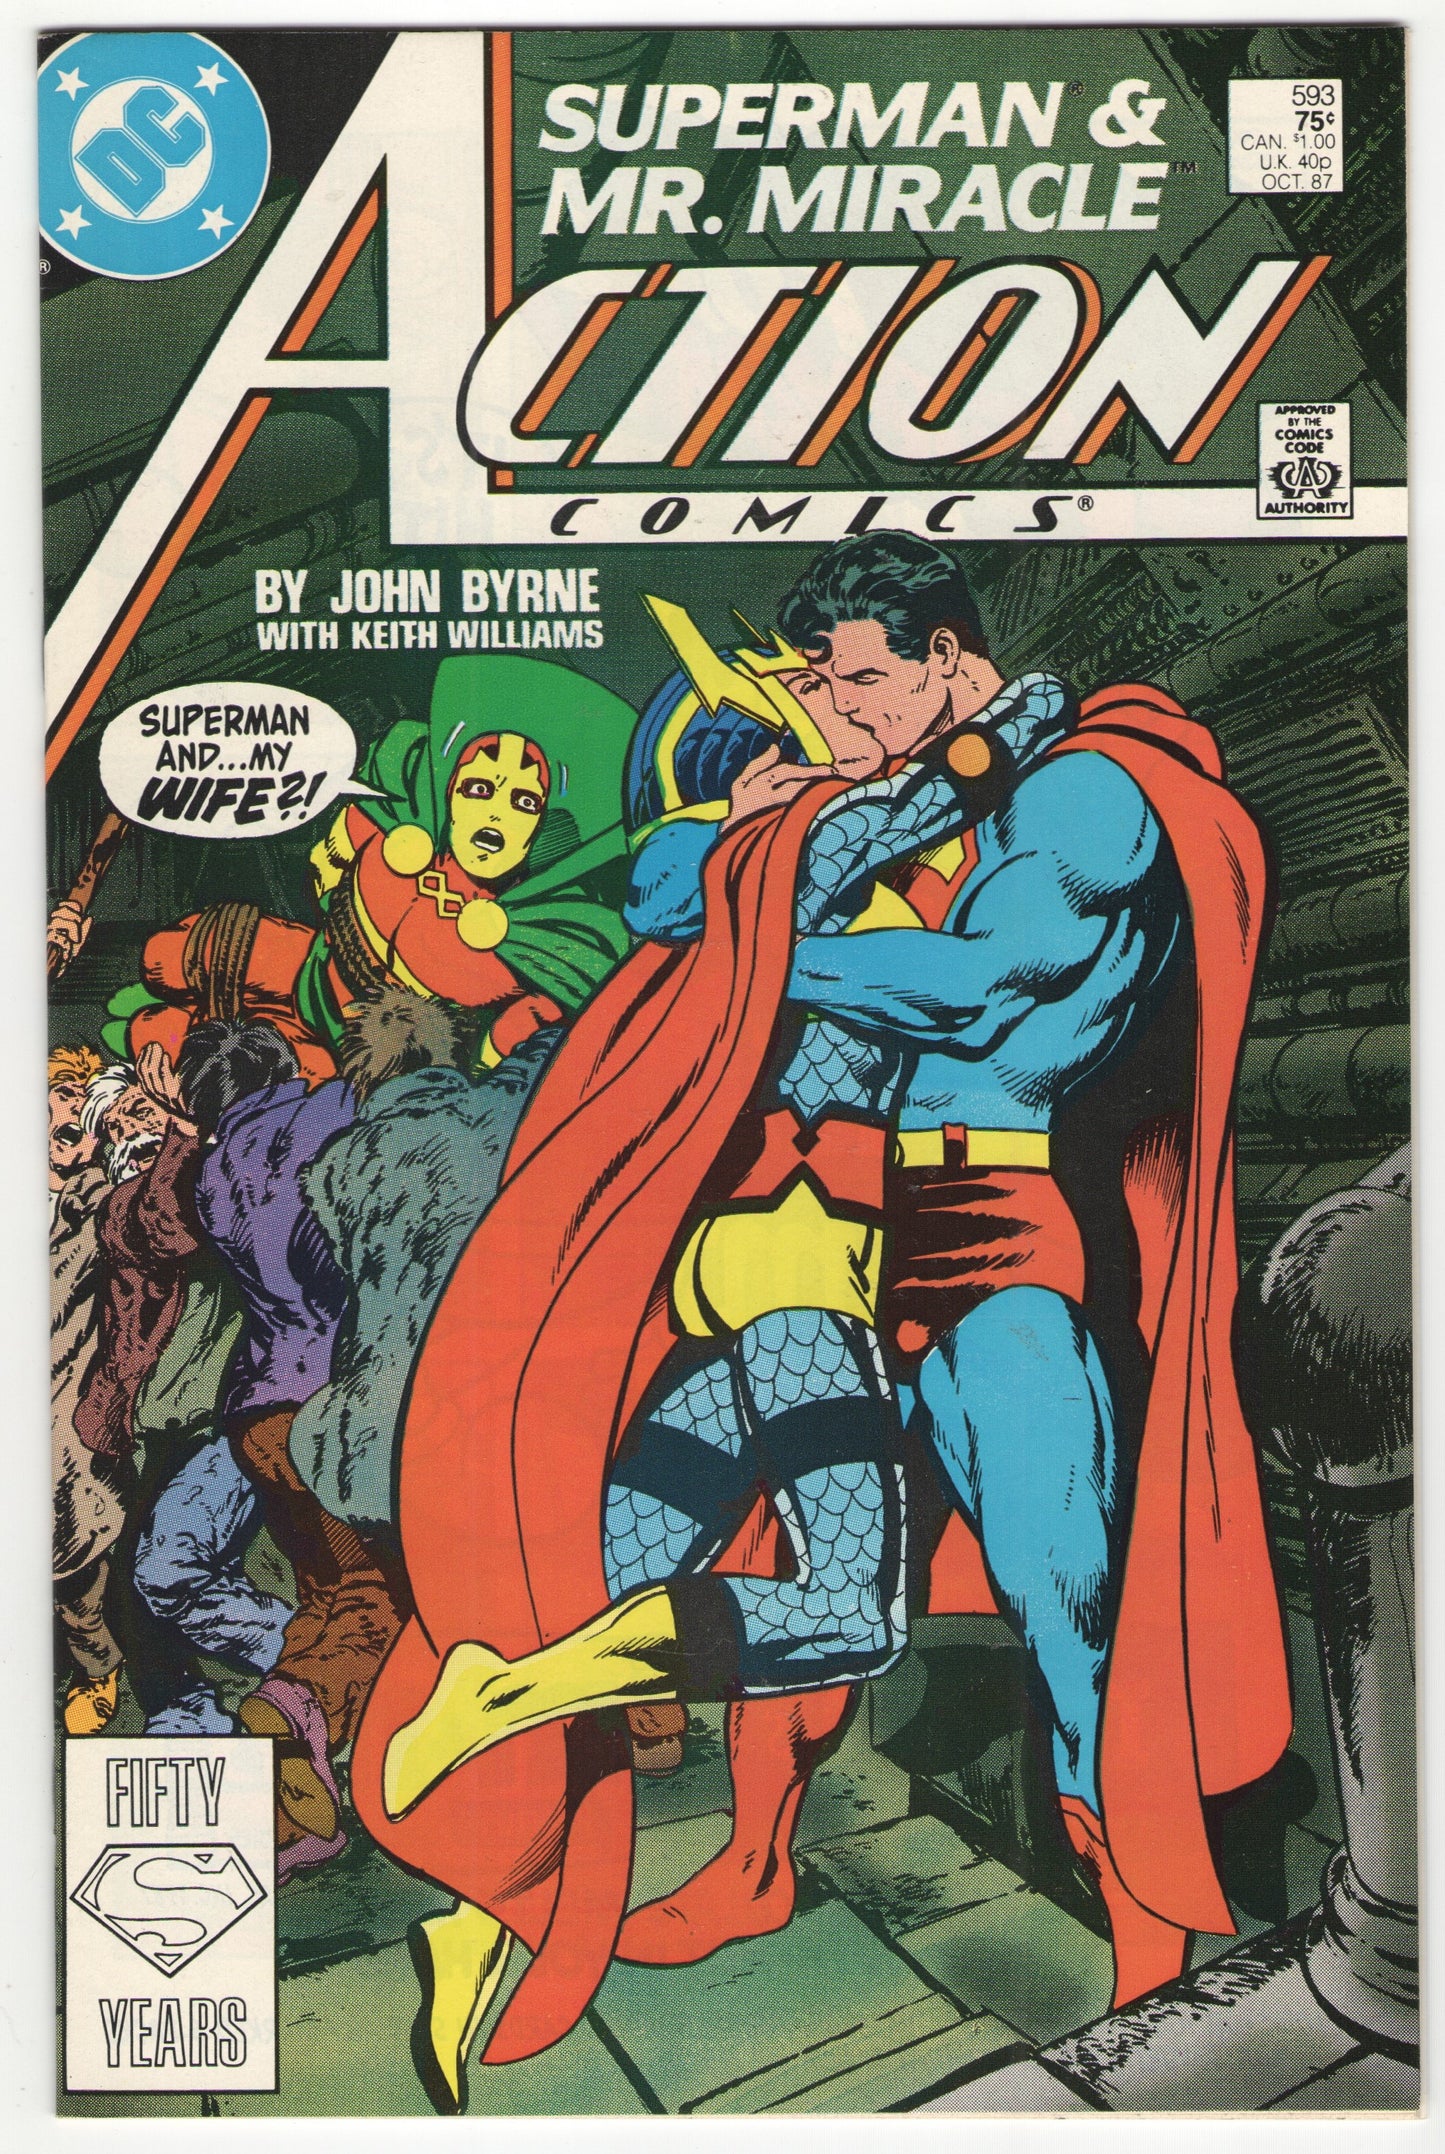 Action Comics #592-593 Controversial “Sleez” Story Arc (1987)